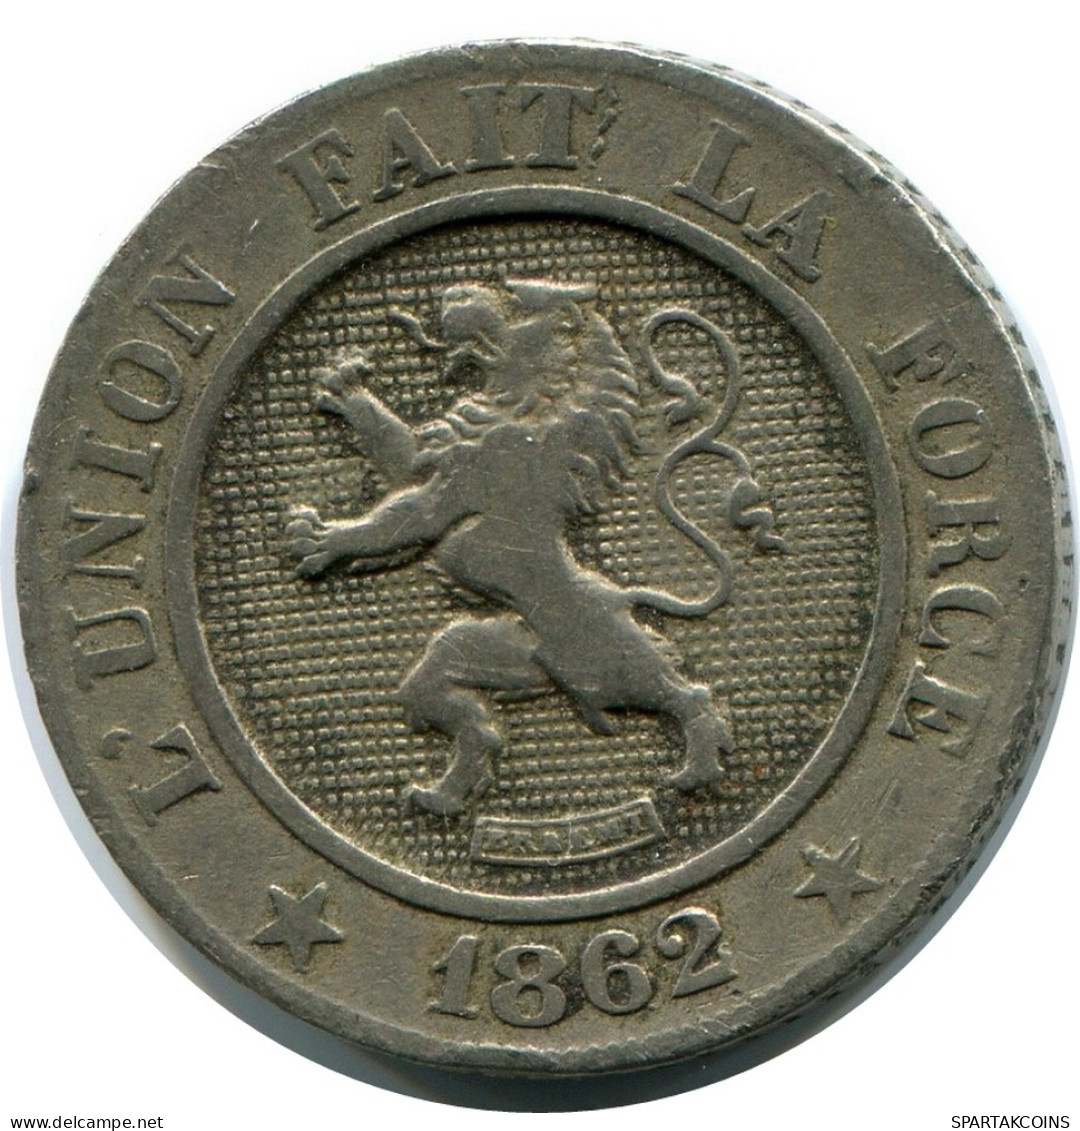 10 CENTIMES 1862 DUTCH Text BELGIUM Coin #AX364.U - 10 Cents